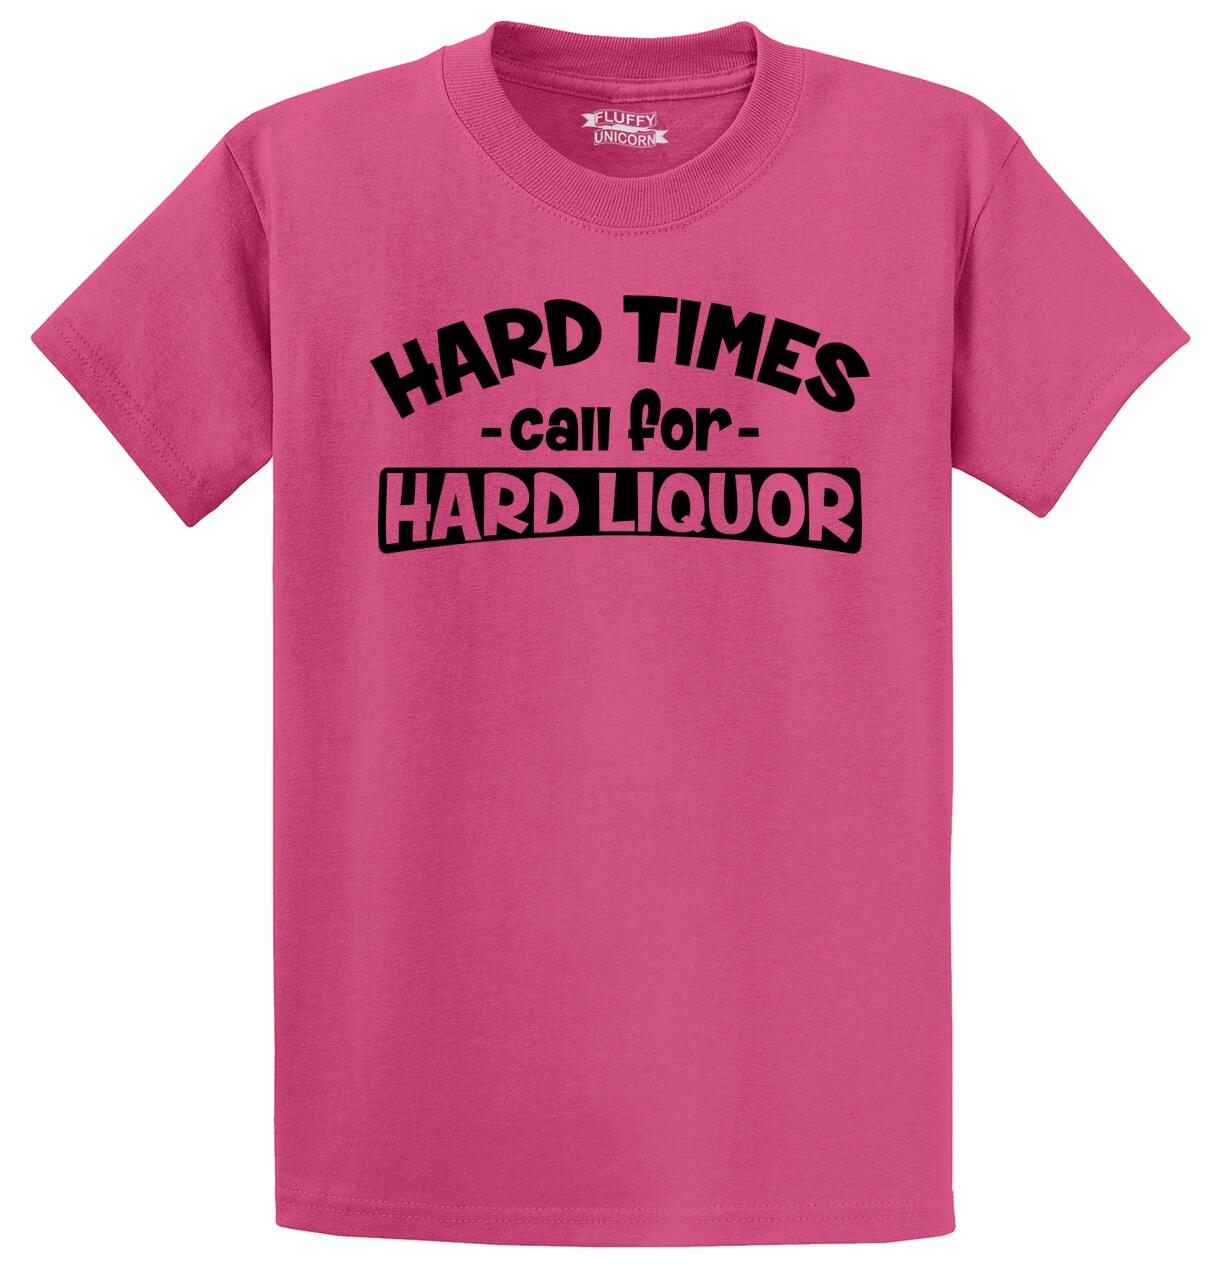 Hard Times Call for Hard Liquor Tshirt Gift for Friend Tough Times Drinking T Shirt